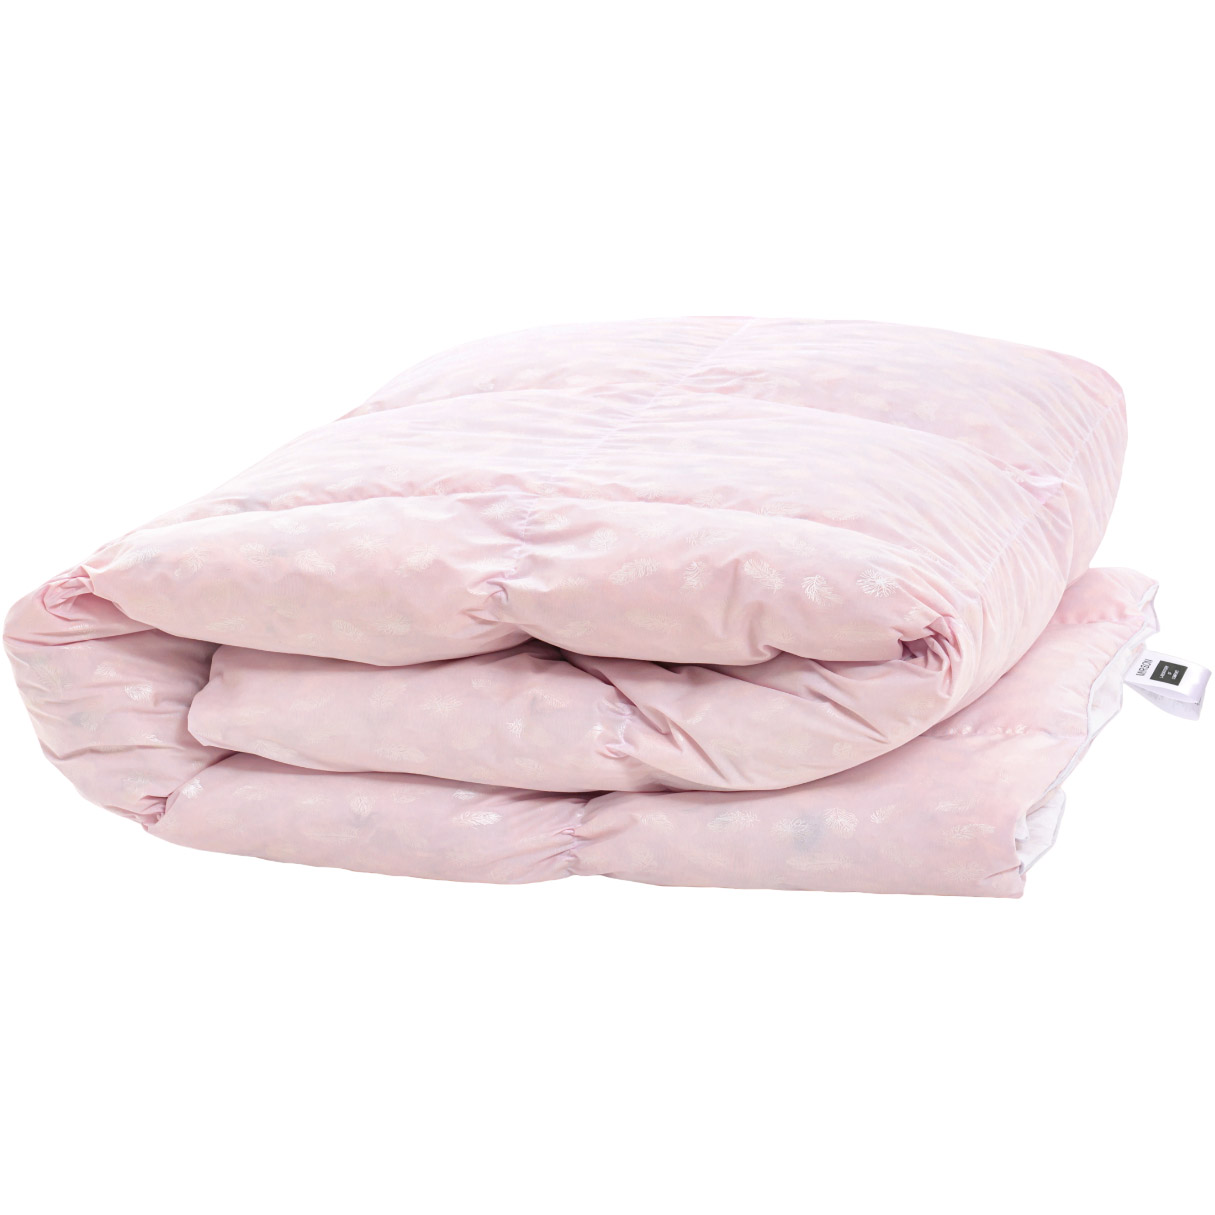 Одеяло пуховое MirSon Karmen №1832 Bio-Pink, 70% пух, 110x140 см, розовое (2200003012798) - фото 1